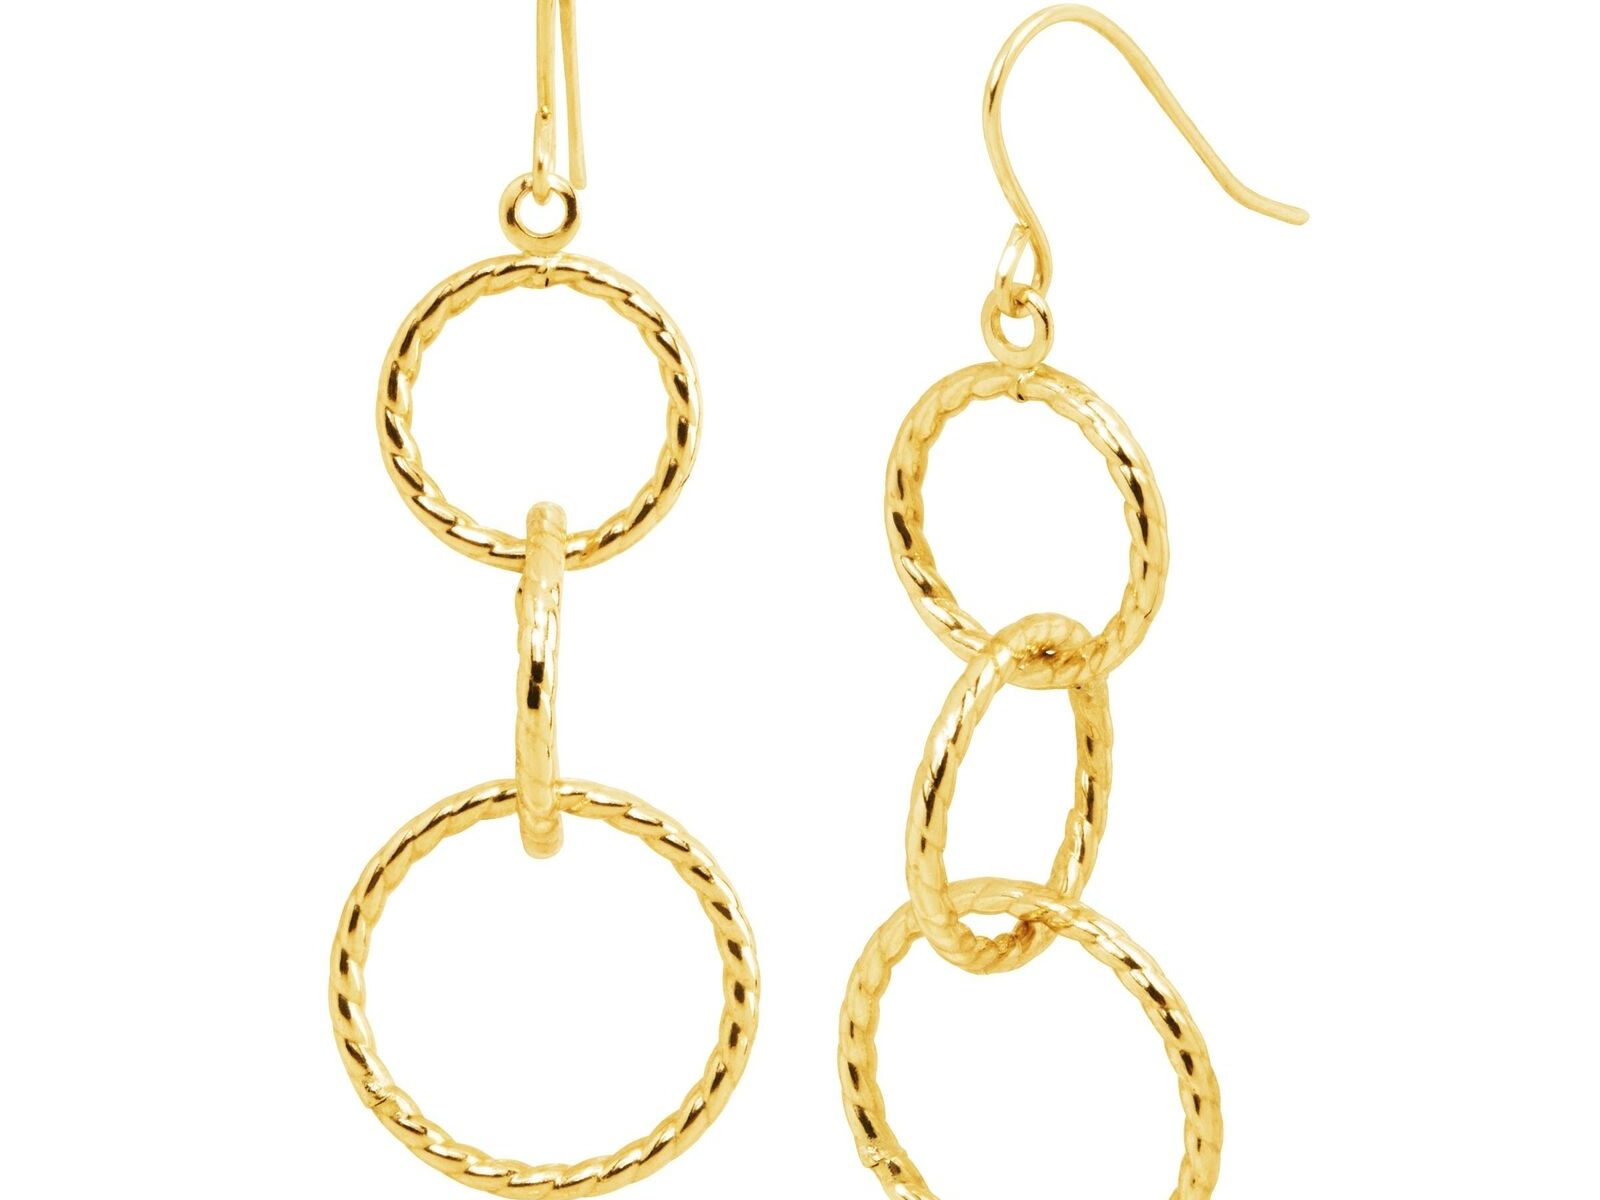 Interlocking Circle Textured Drop Earrings in 14K Gold